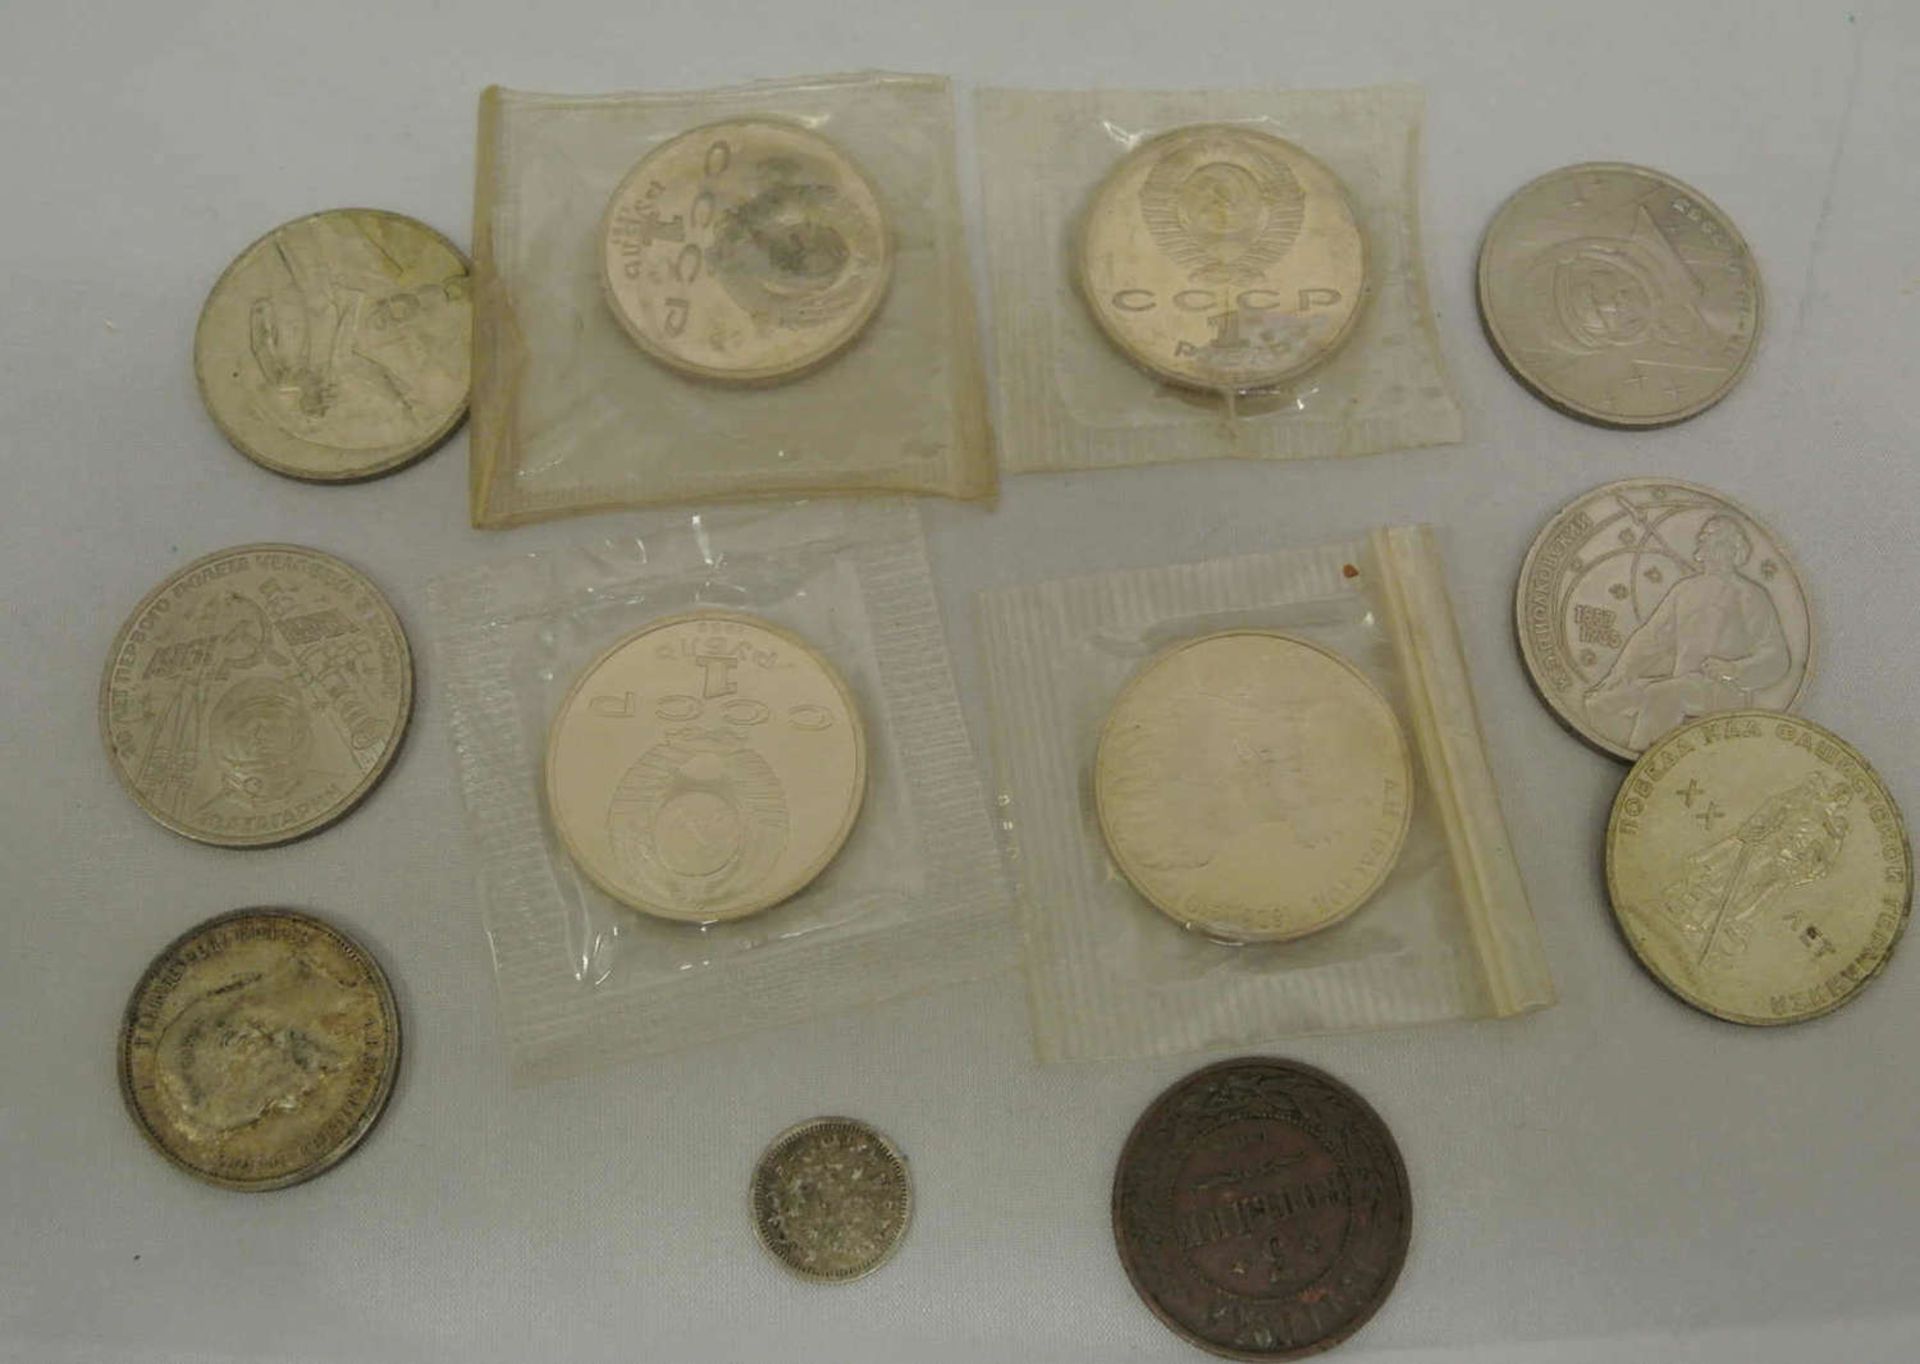 Lot Russland - Münzen, dabei z.Bsp. auch 1x 50 Kopeken 1913